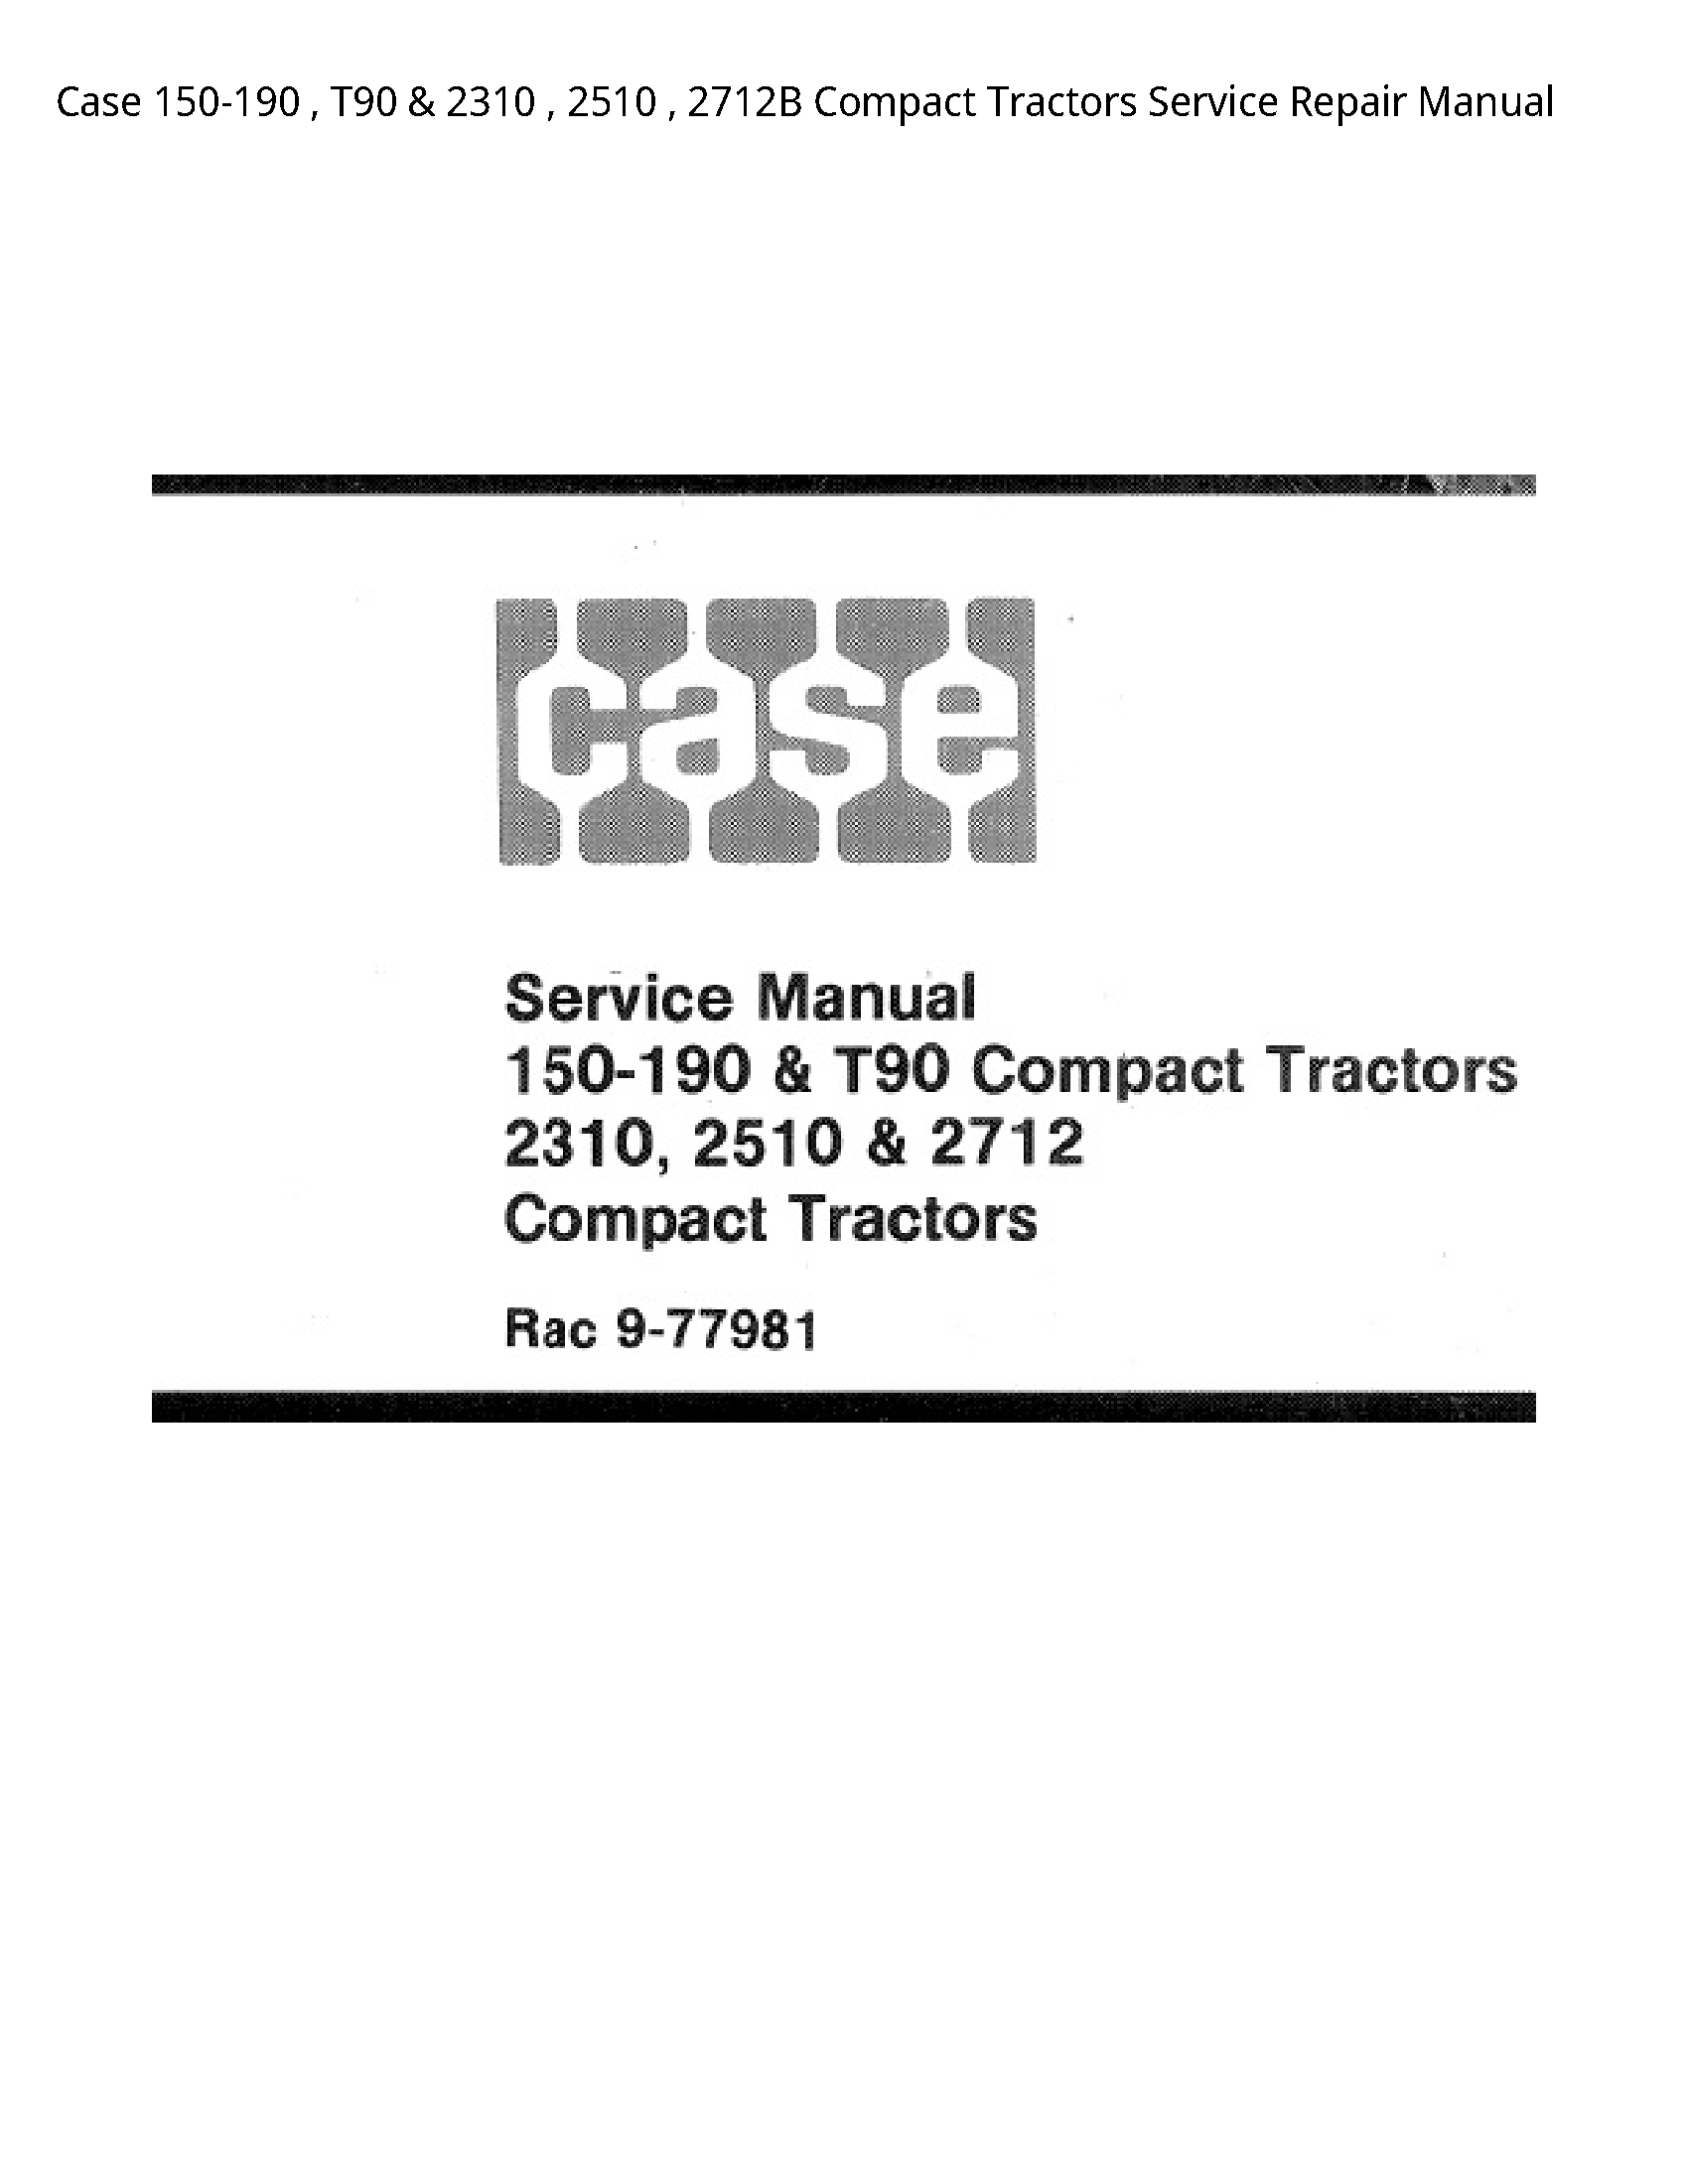 Case/Case IH 150-190 Compact Tractors manual